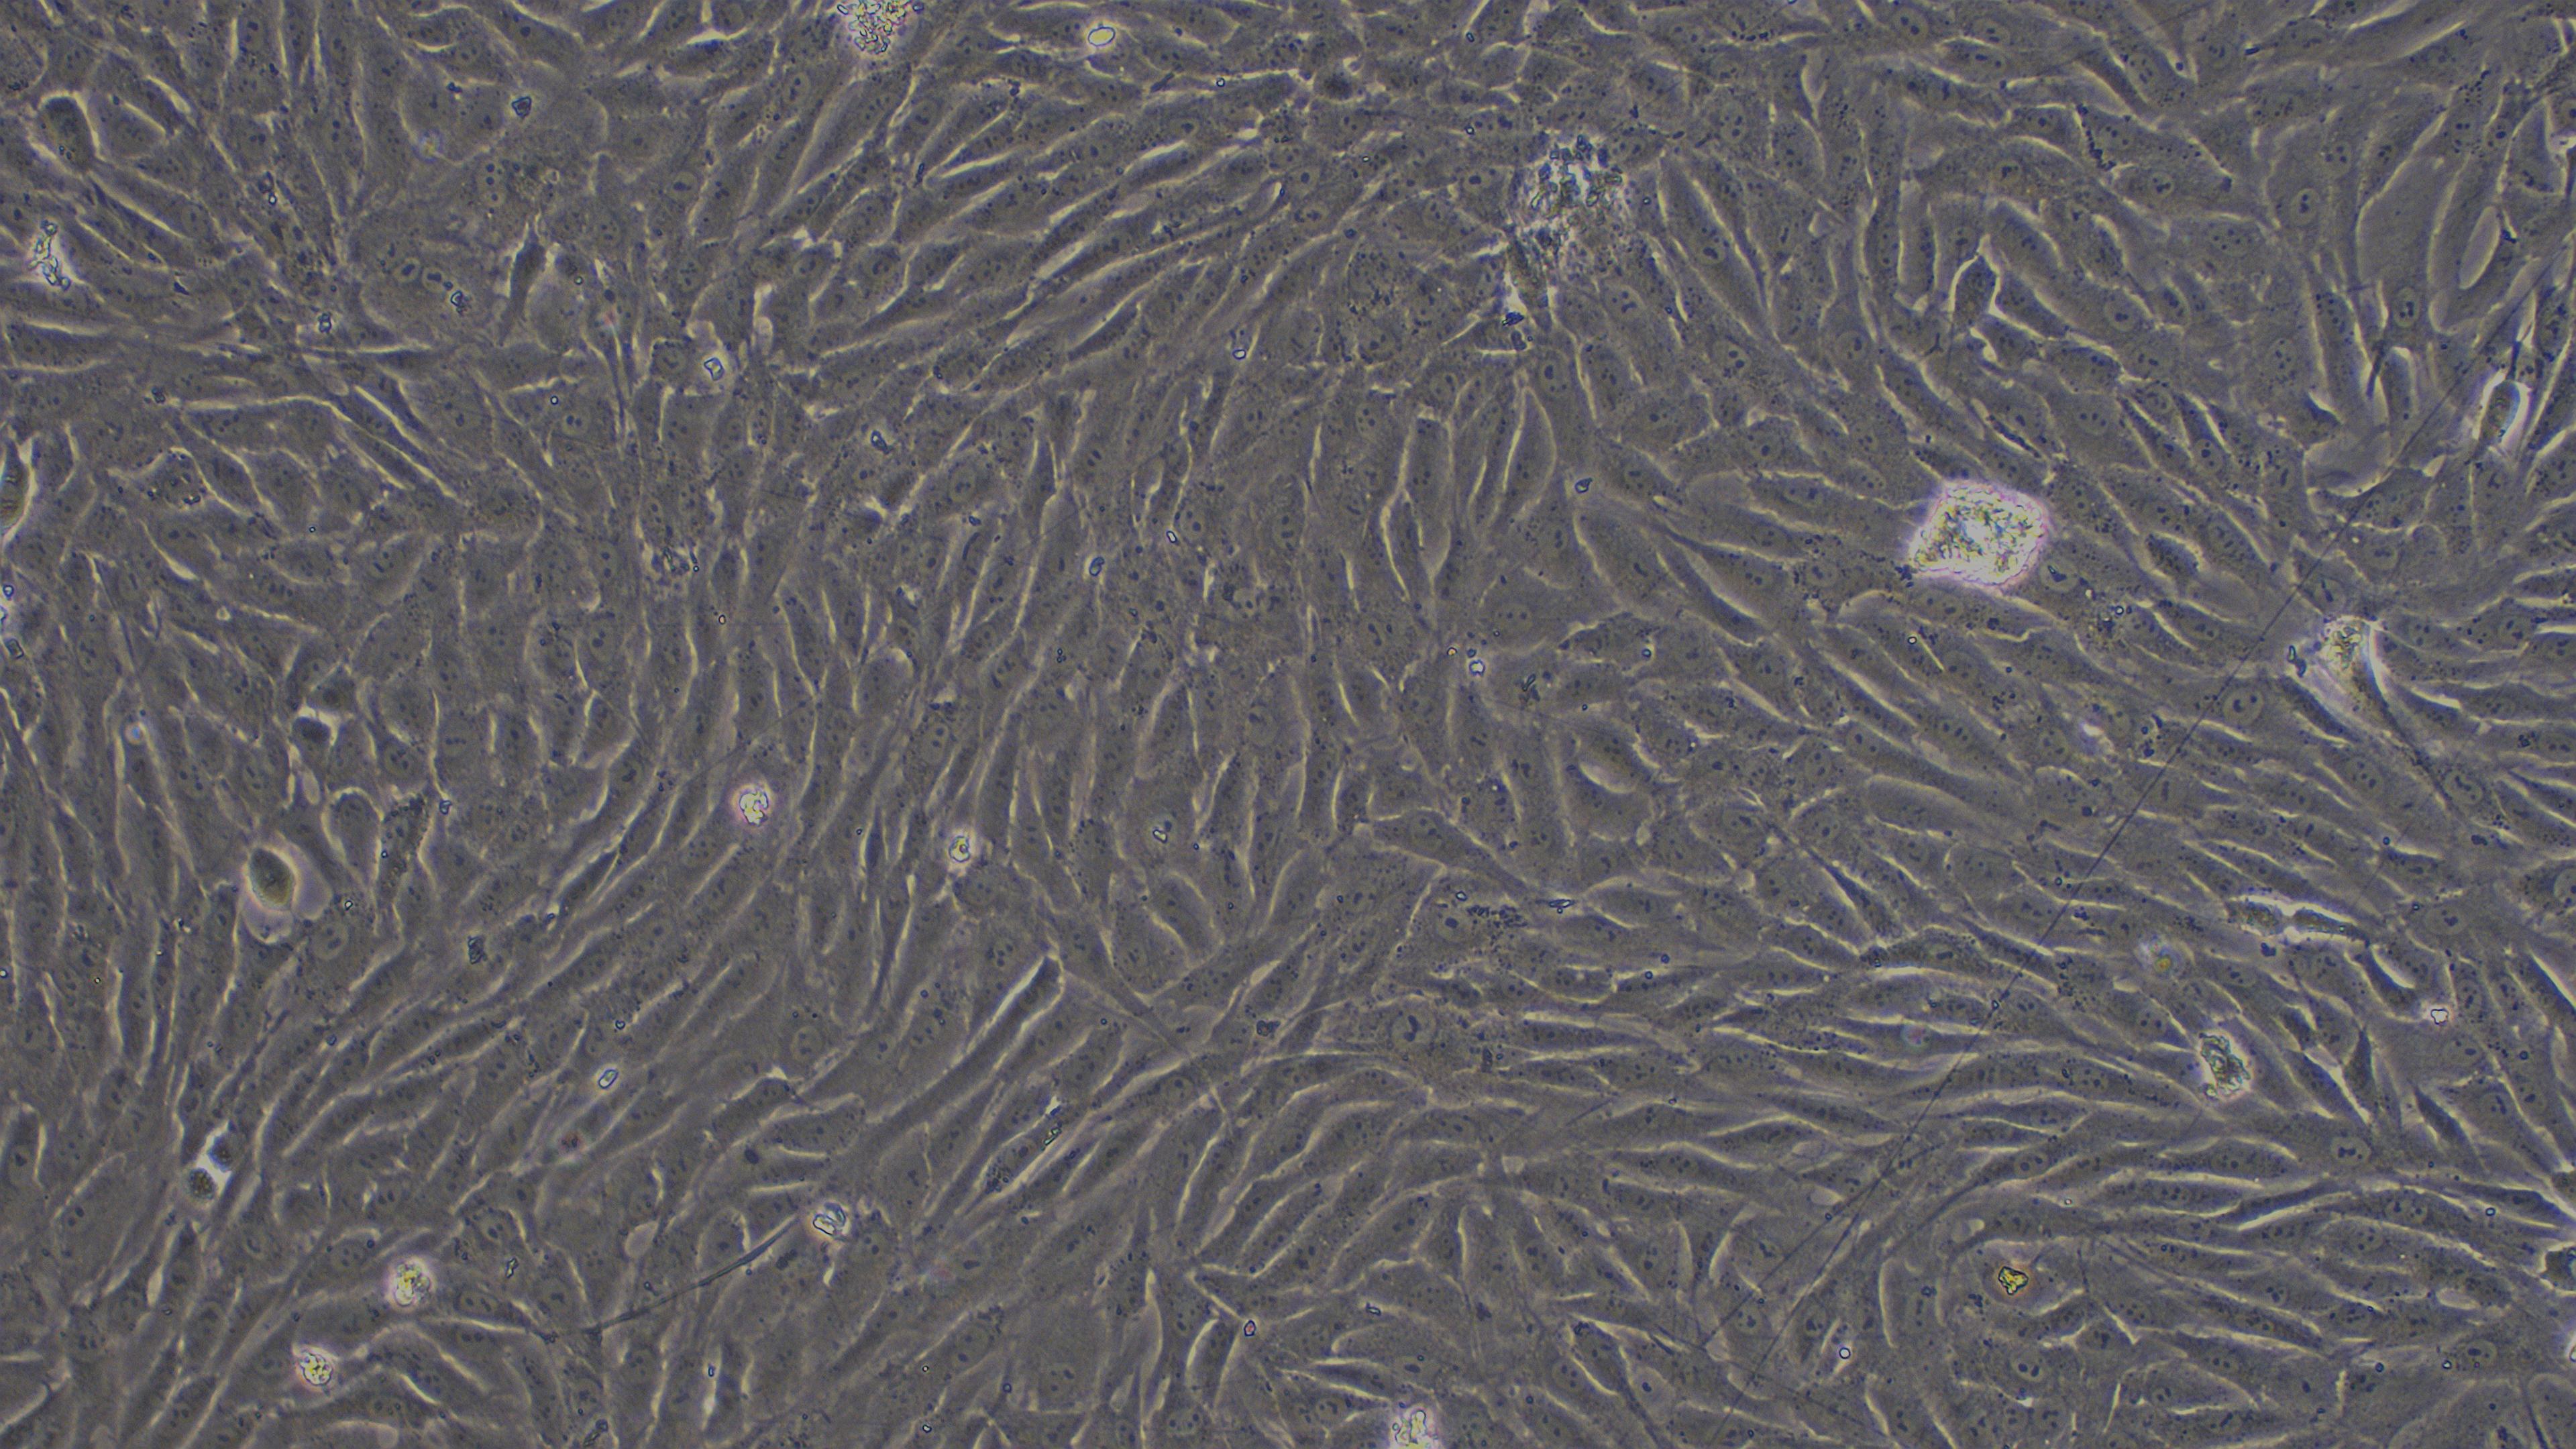 Primary Rabbit Corneal Epithelial Cells (CEC)